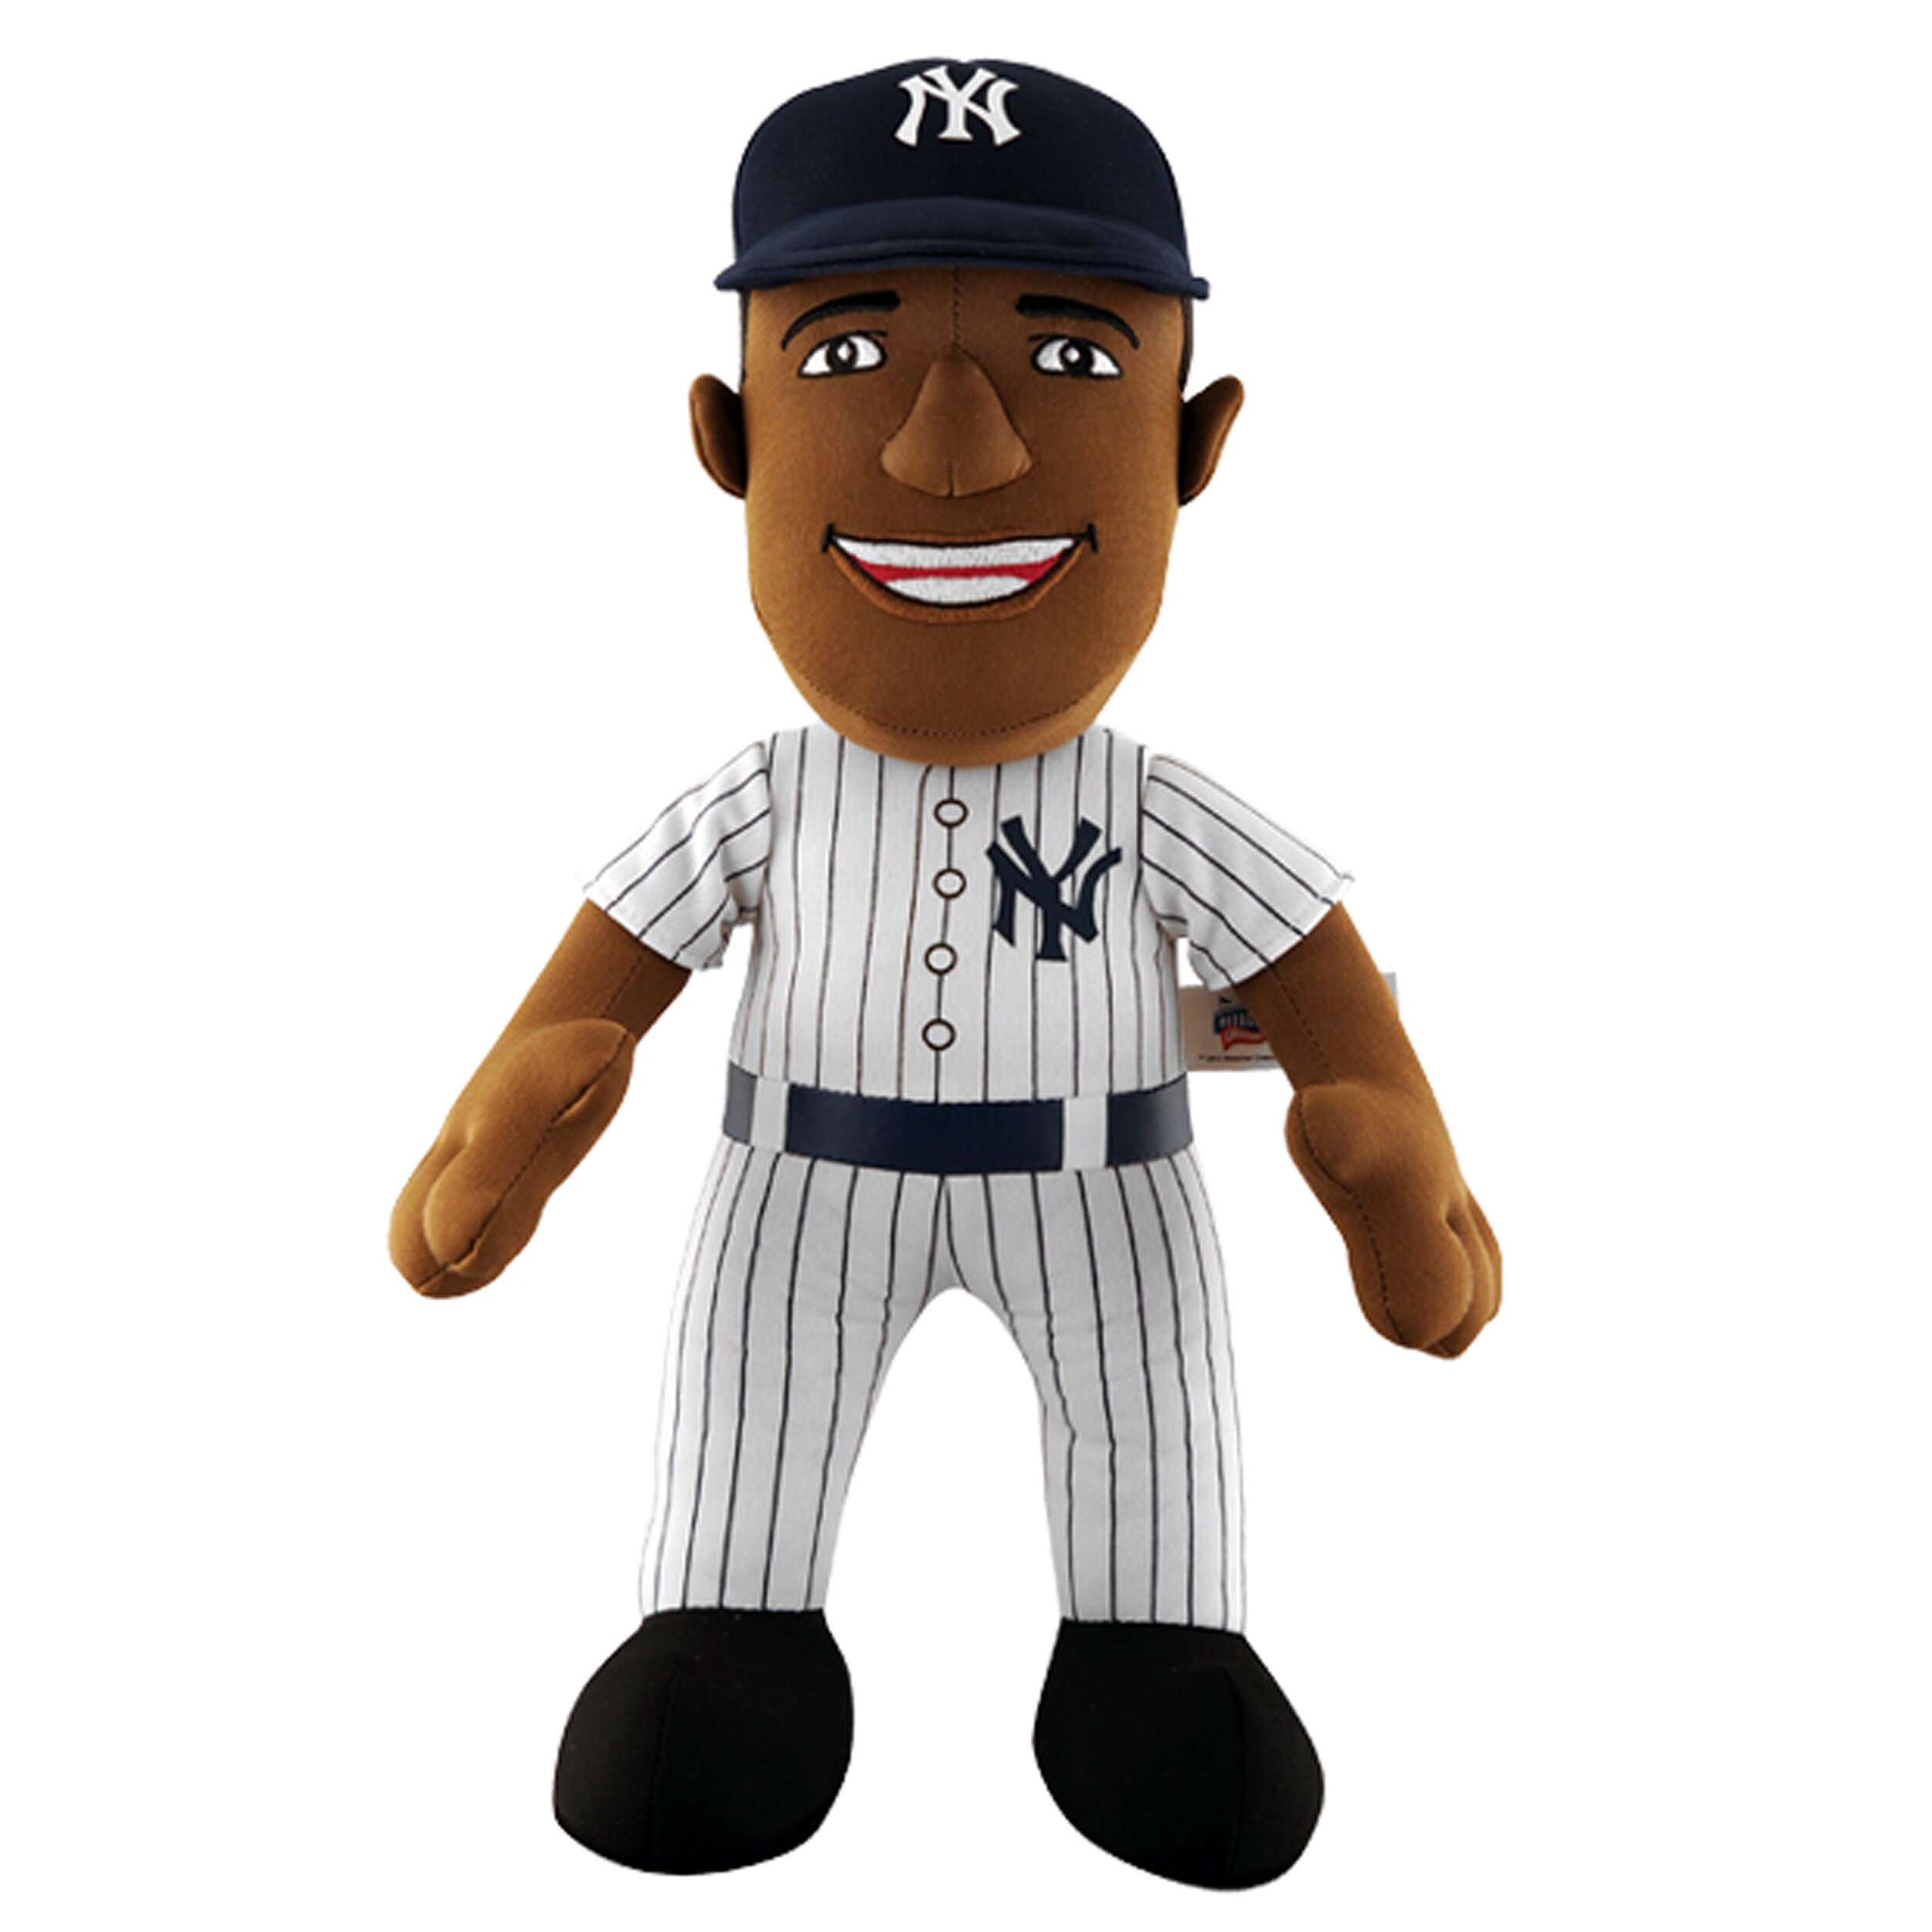 New York Yankees Robinson Cano 14 inch Plush Doll Collectible Dolls